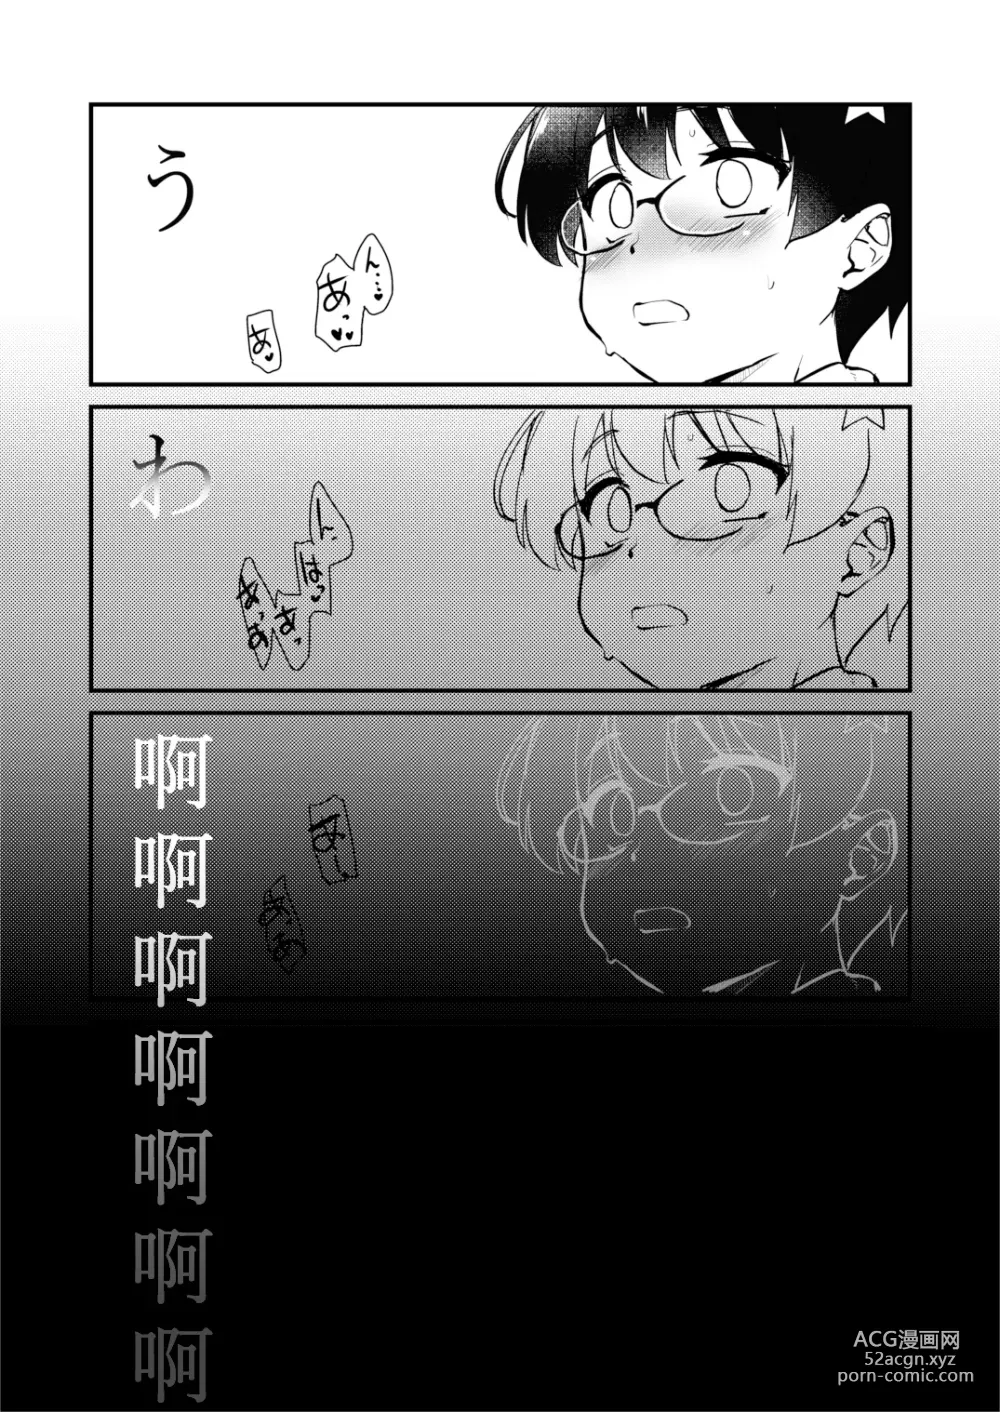 Page 23 of doujinshi 我畫的色情漫畫被AV真人化了!? 因為機會難得所以去拍攝現場觀摩之後的心得感想